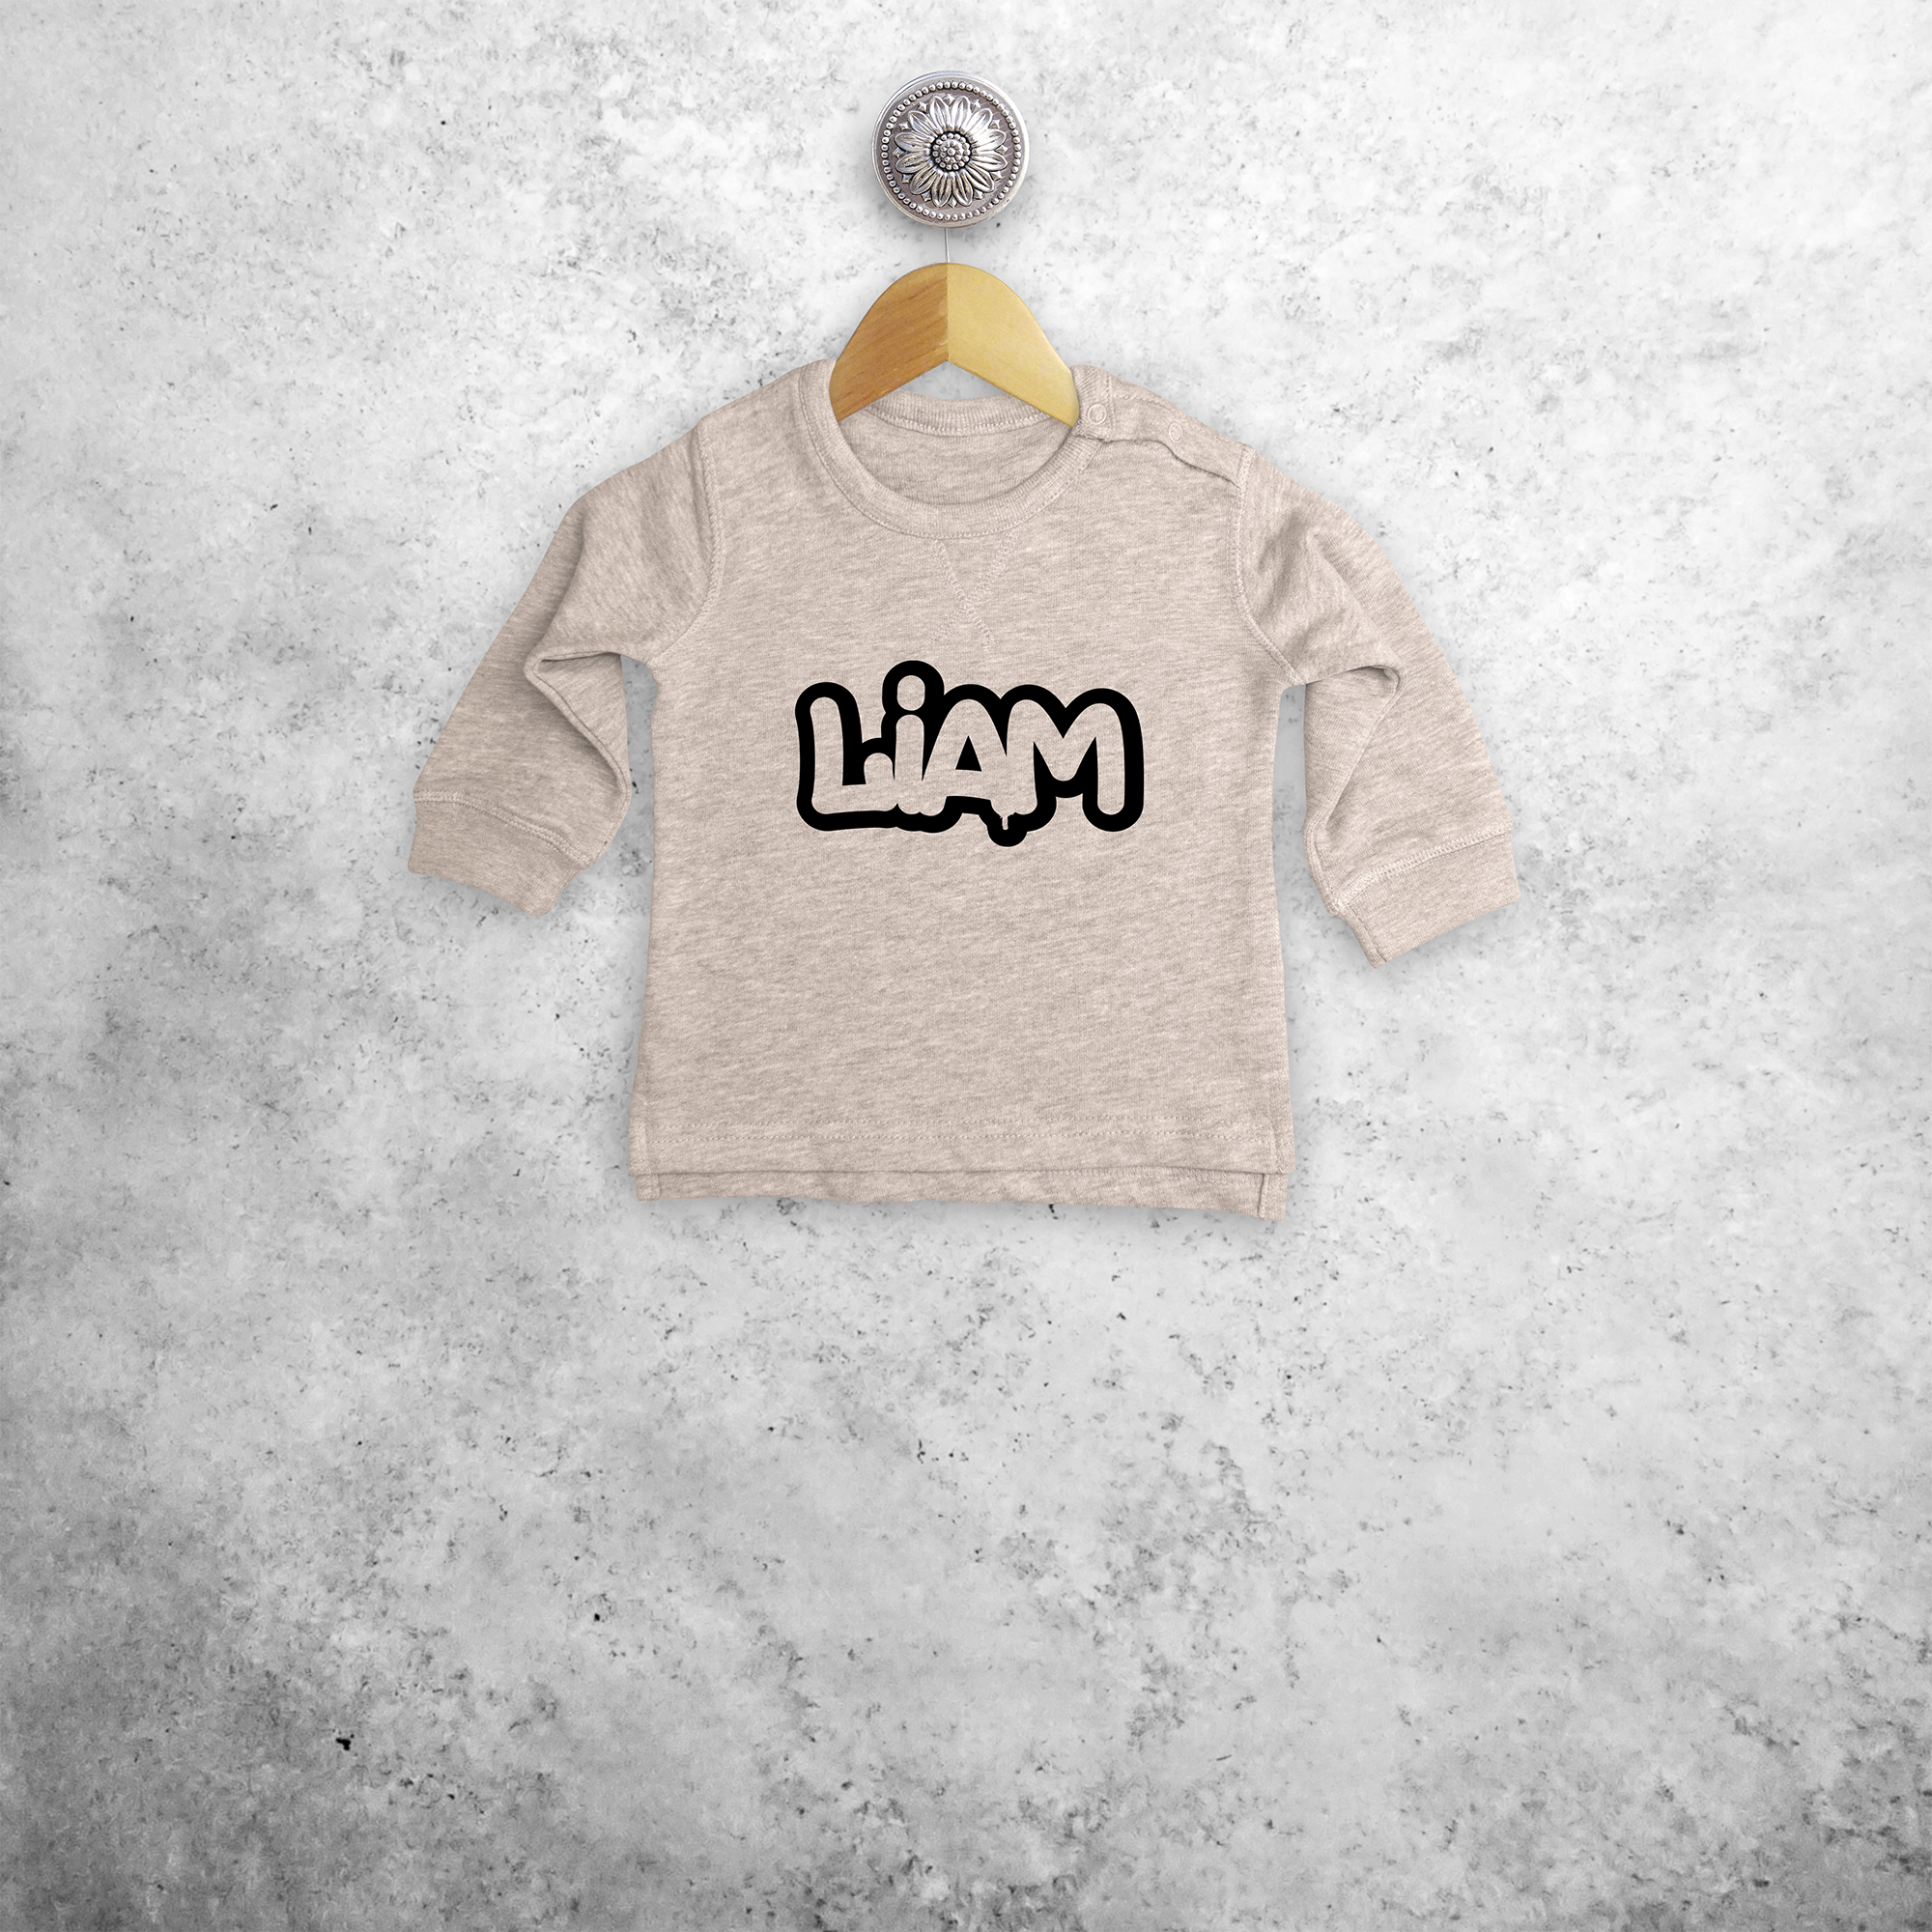 Graffiti baby sweater